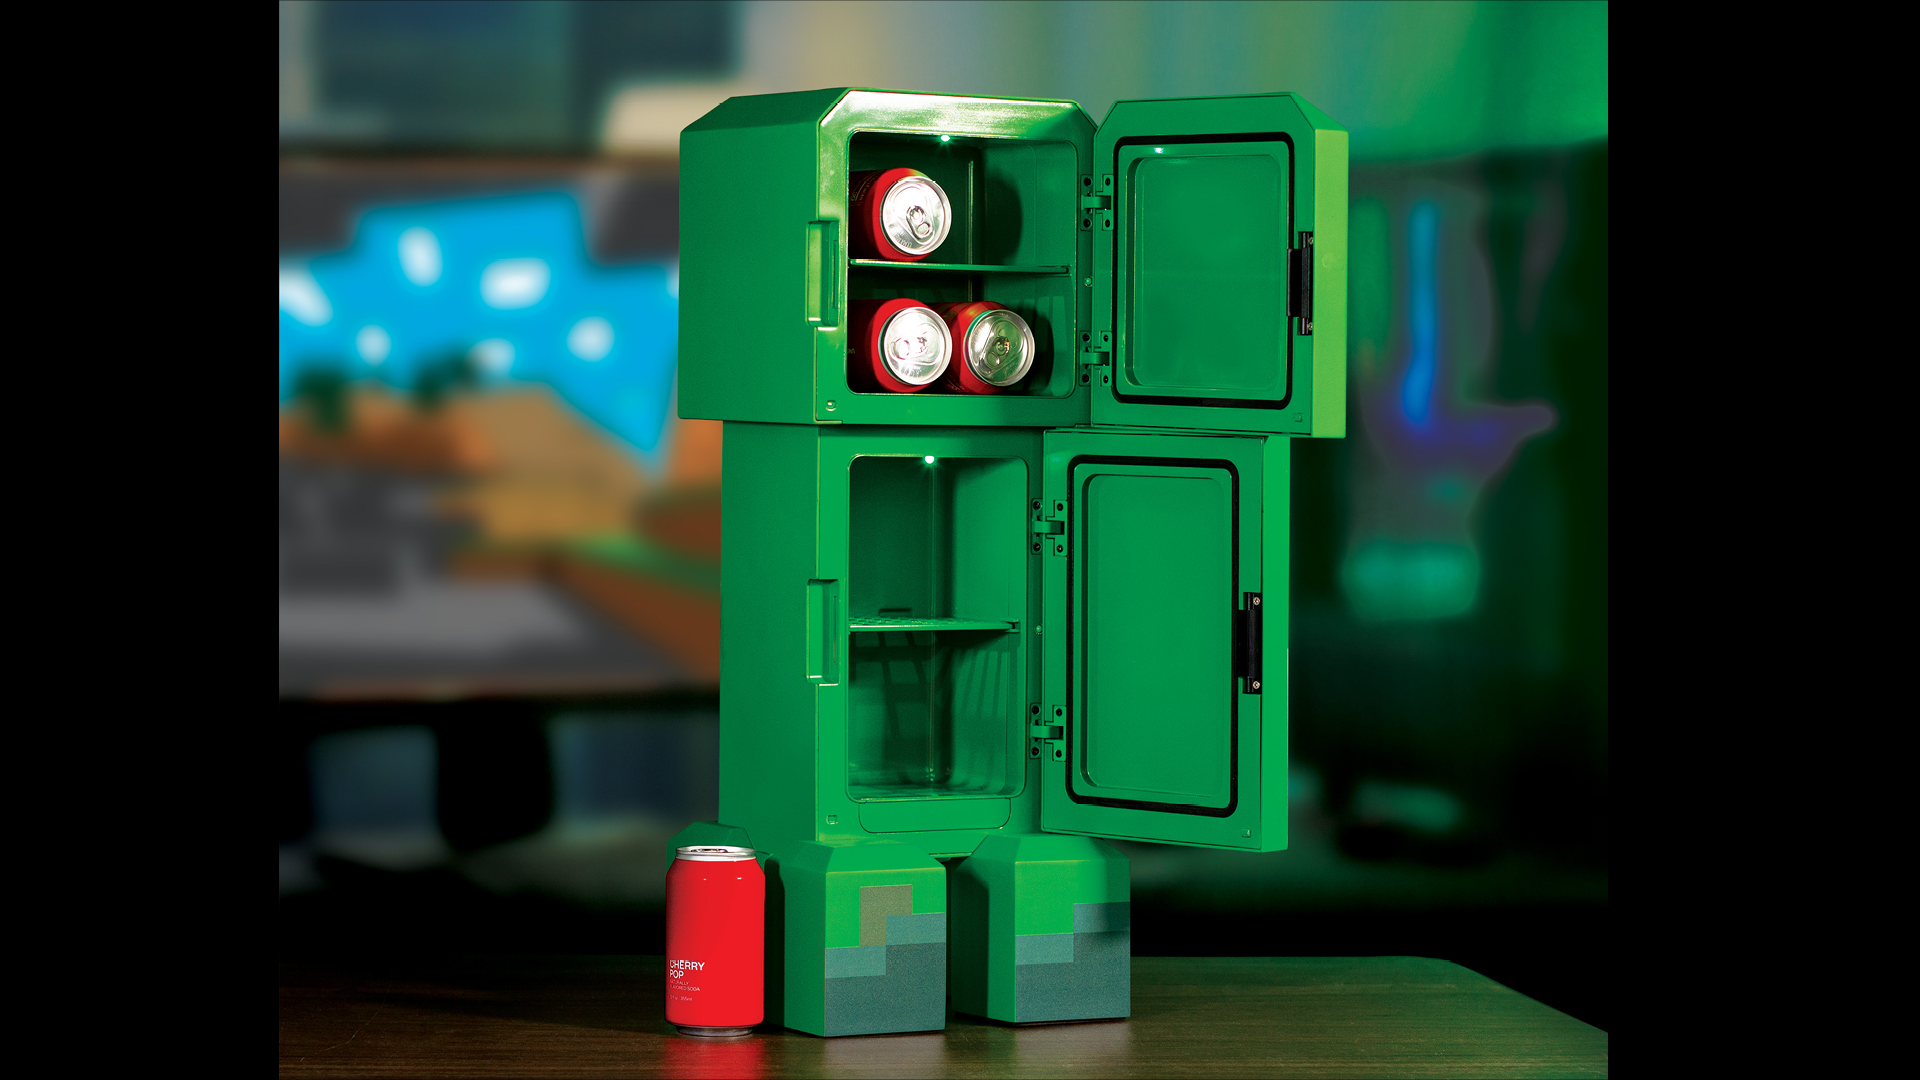 Ukonic Rolls Out 'Minecraft' Figural Mini-Fridges